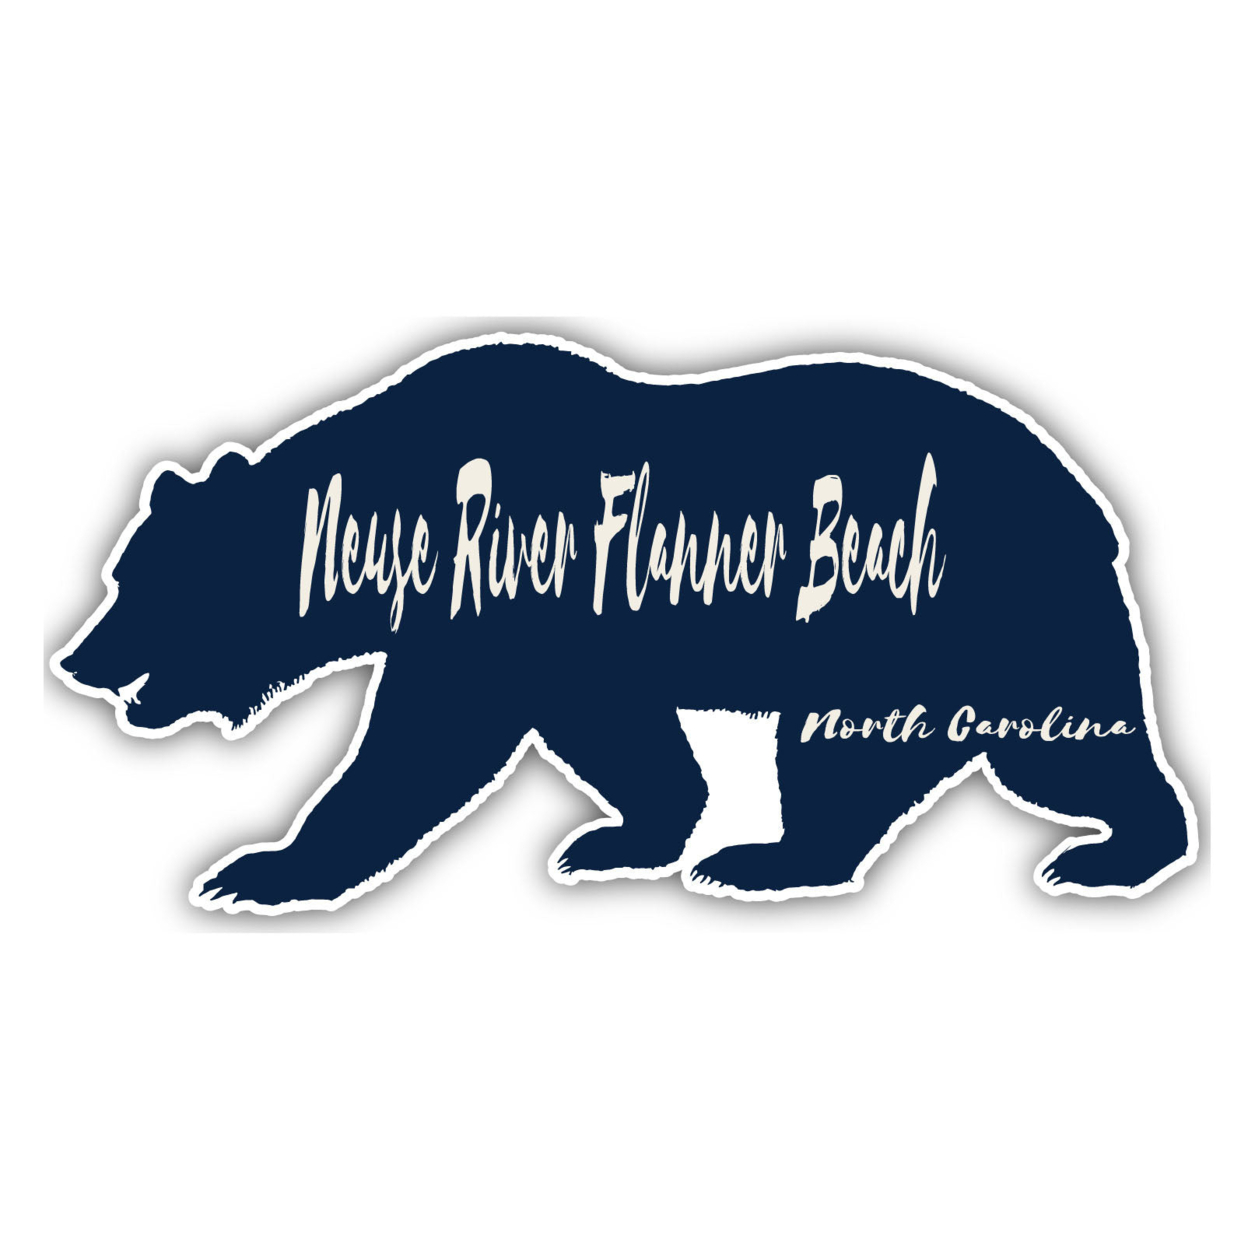 Neuse River Flanner Beach North Carolina Souvenir Decorative Stickers (Choose Theme And Size) - Single Unit, 2-Inch, Bear